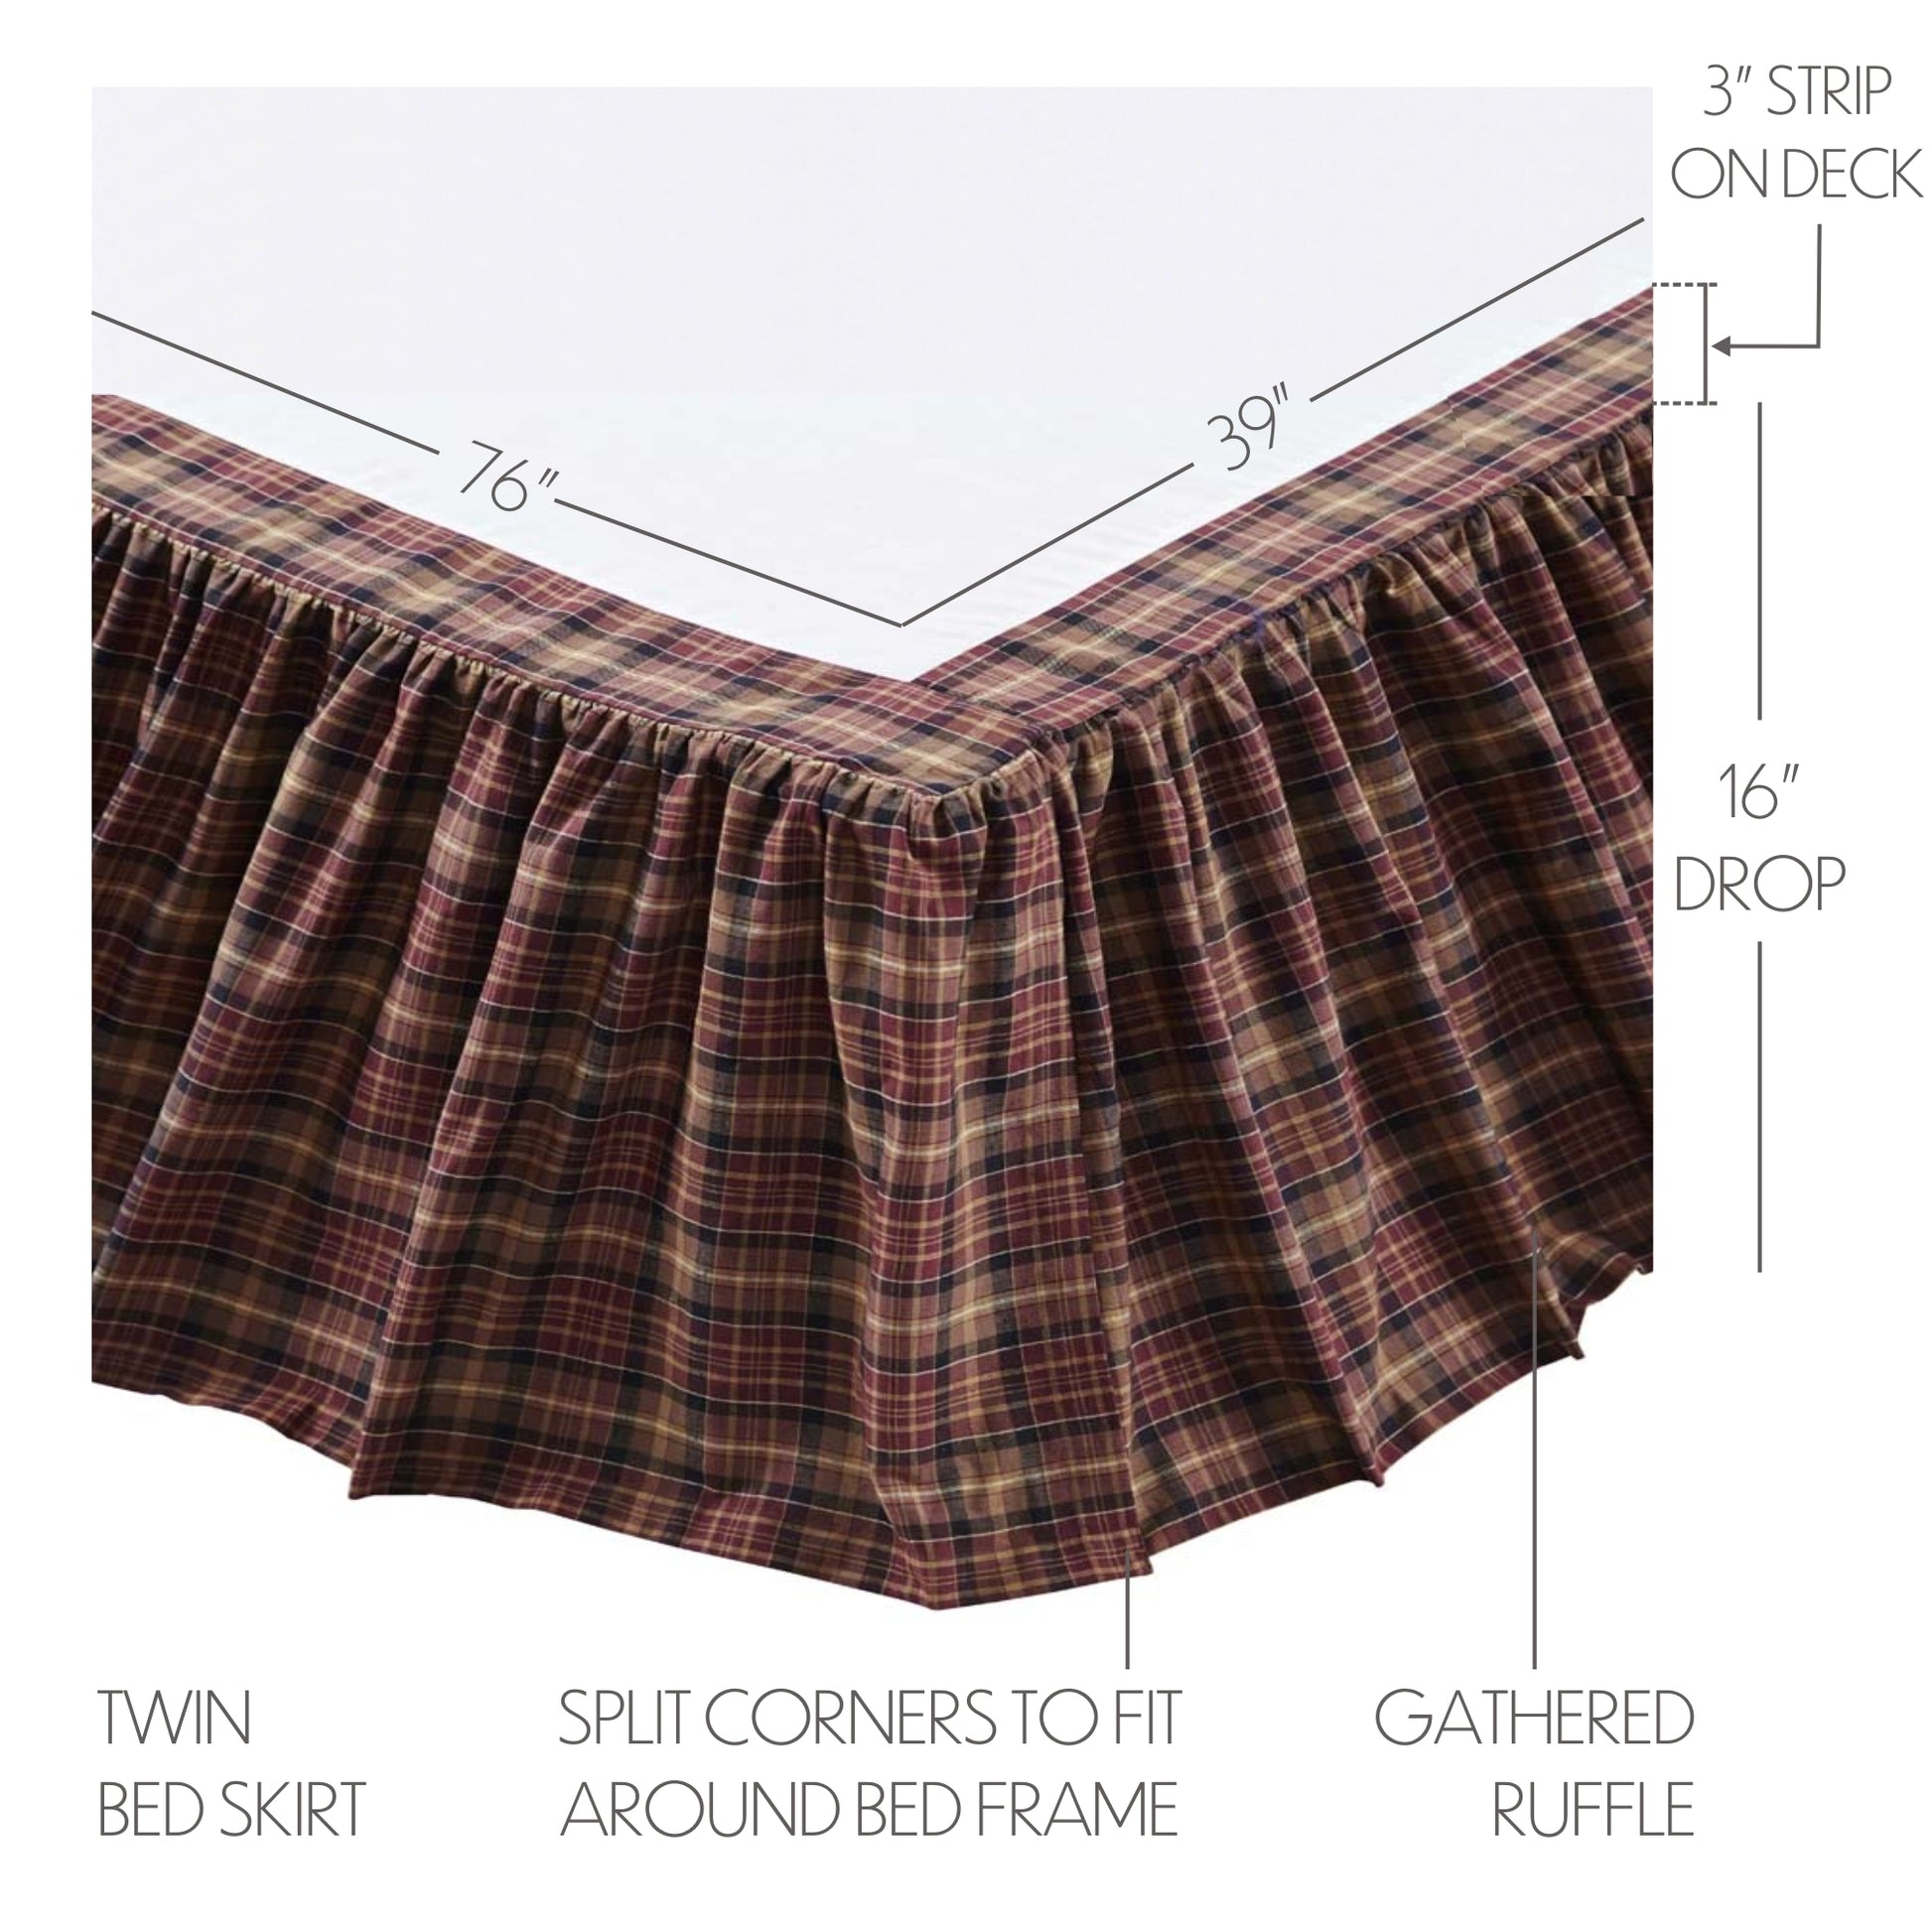 19984-Abilene-Star-Twin-Bed-Skirt-39x76x16-image-1